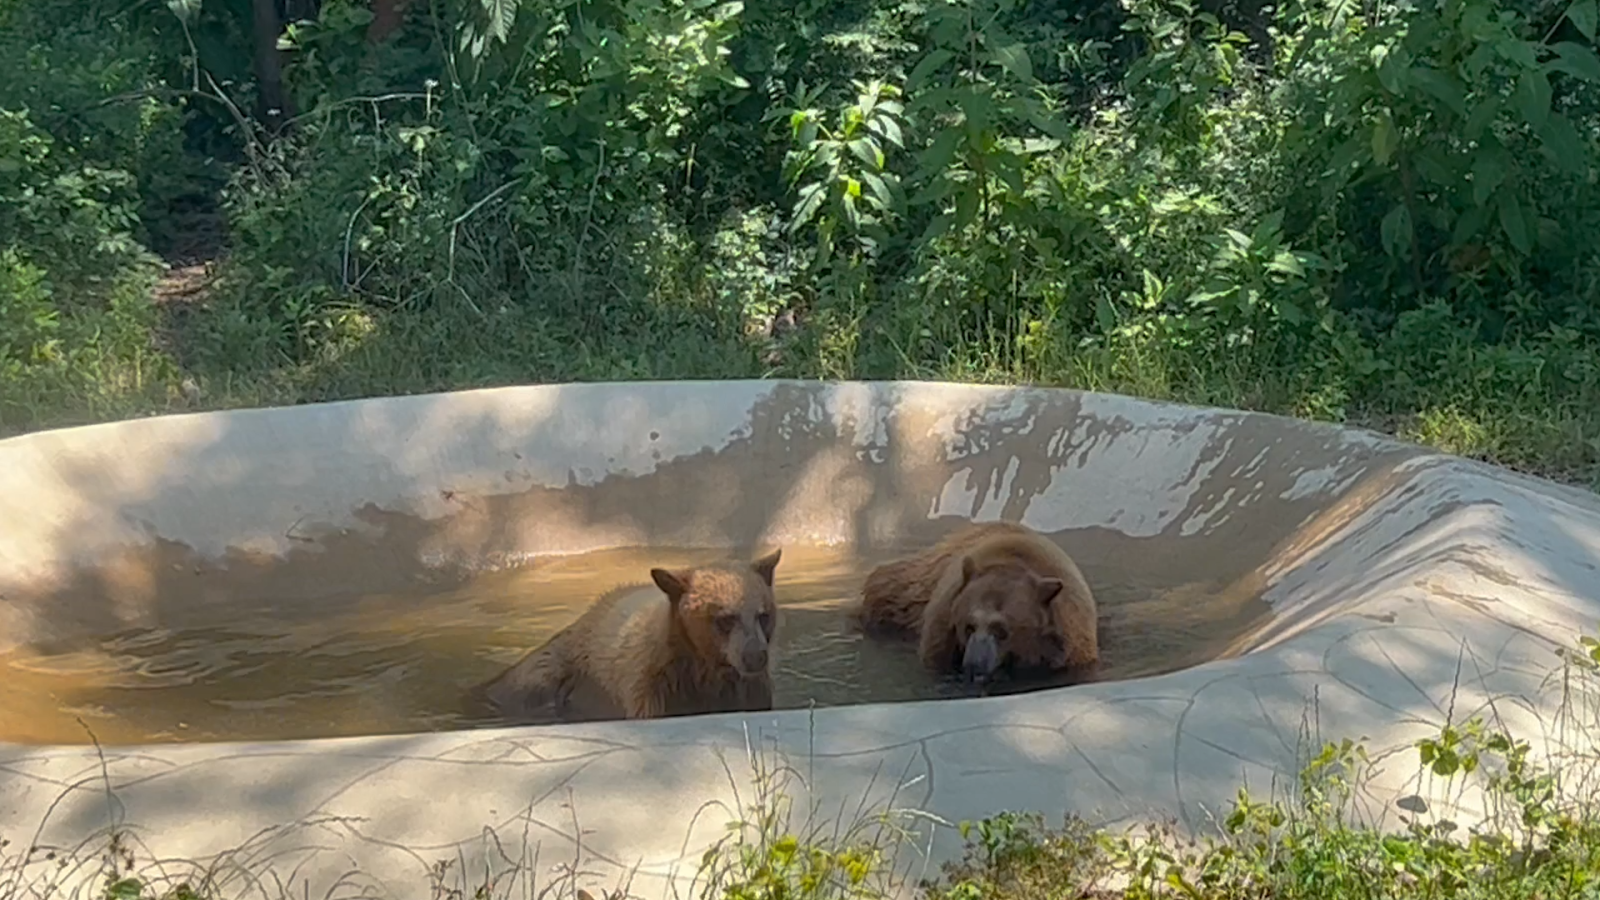 Two bears splashing around in a pool